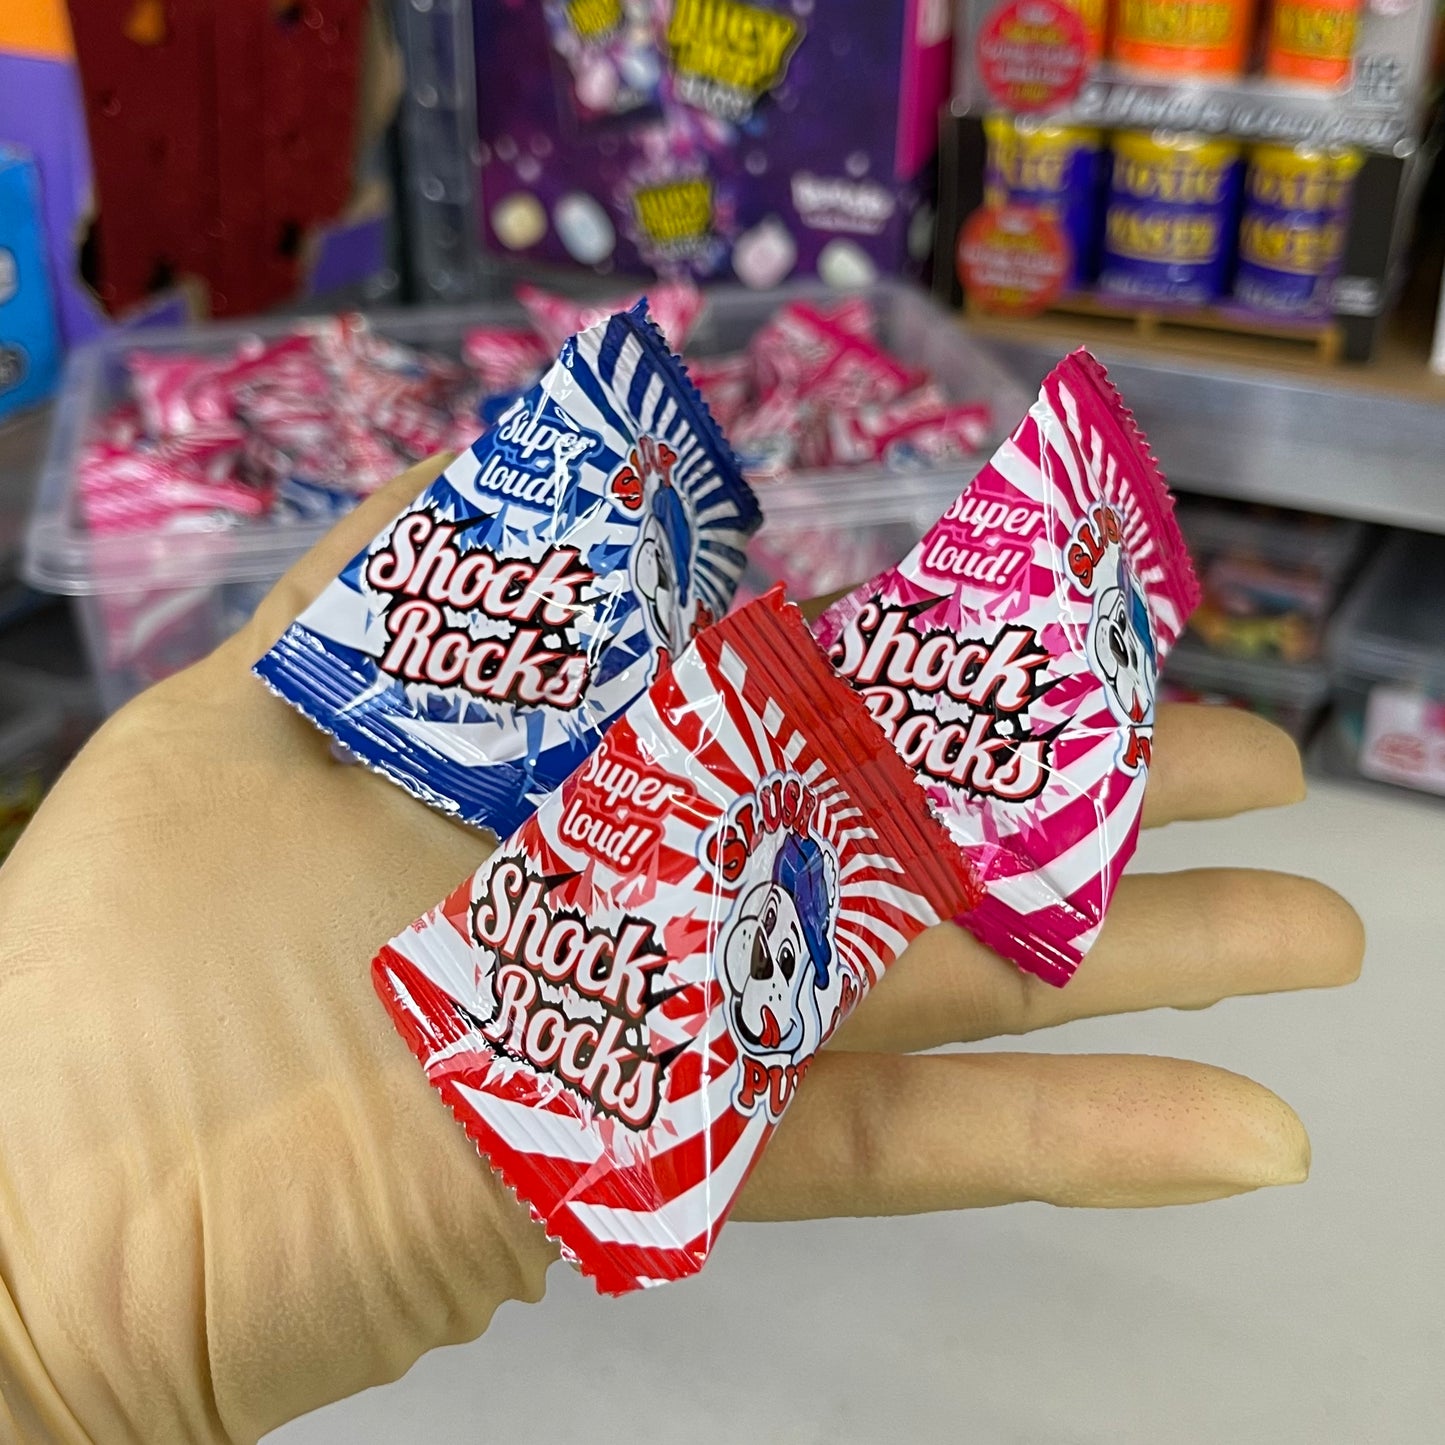 Slush Puppie Shock Rocks Popping Candy 4 Pack